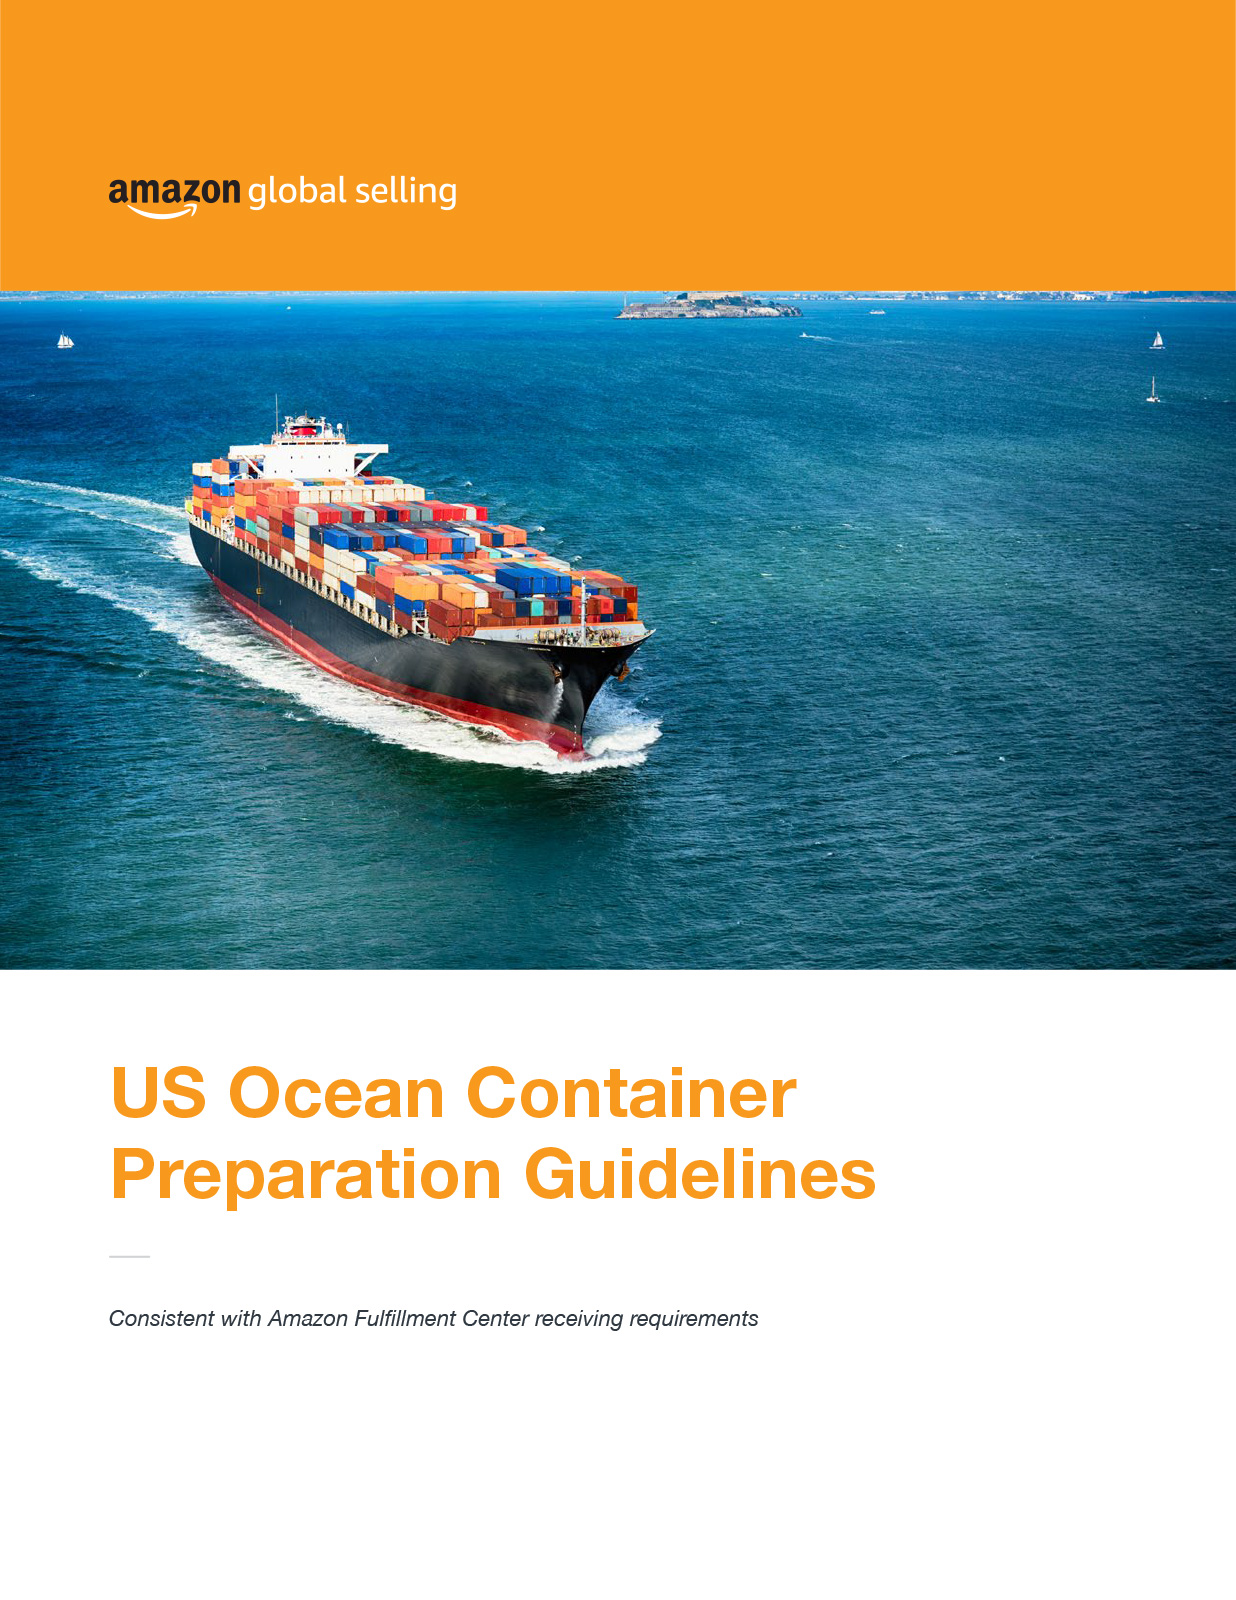 Amazon's Ocean Container Preparation Guidelines